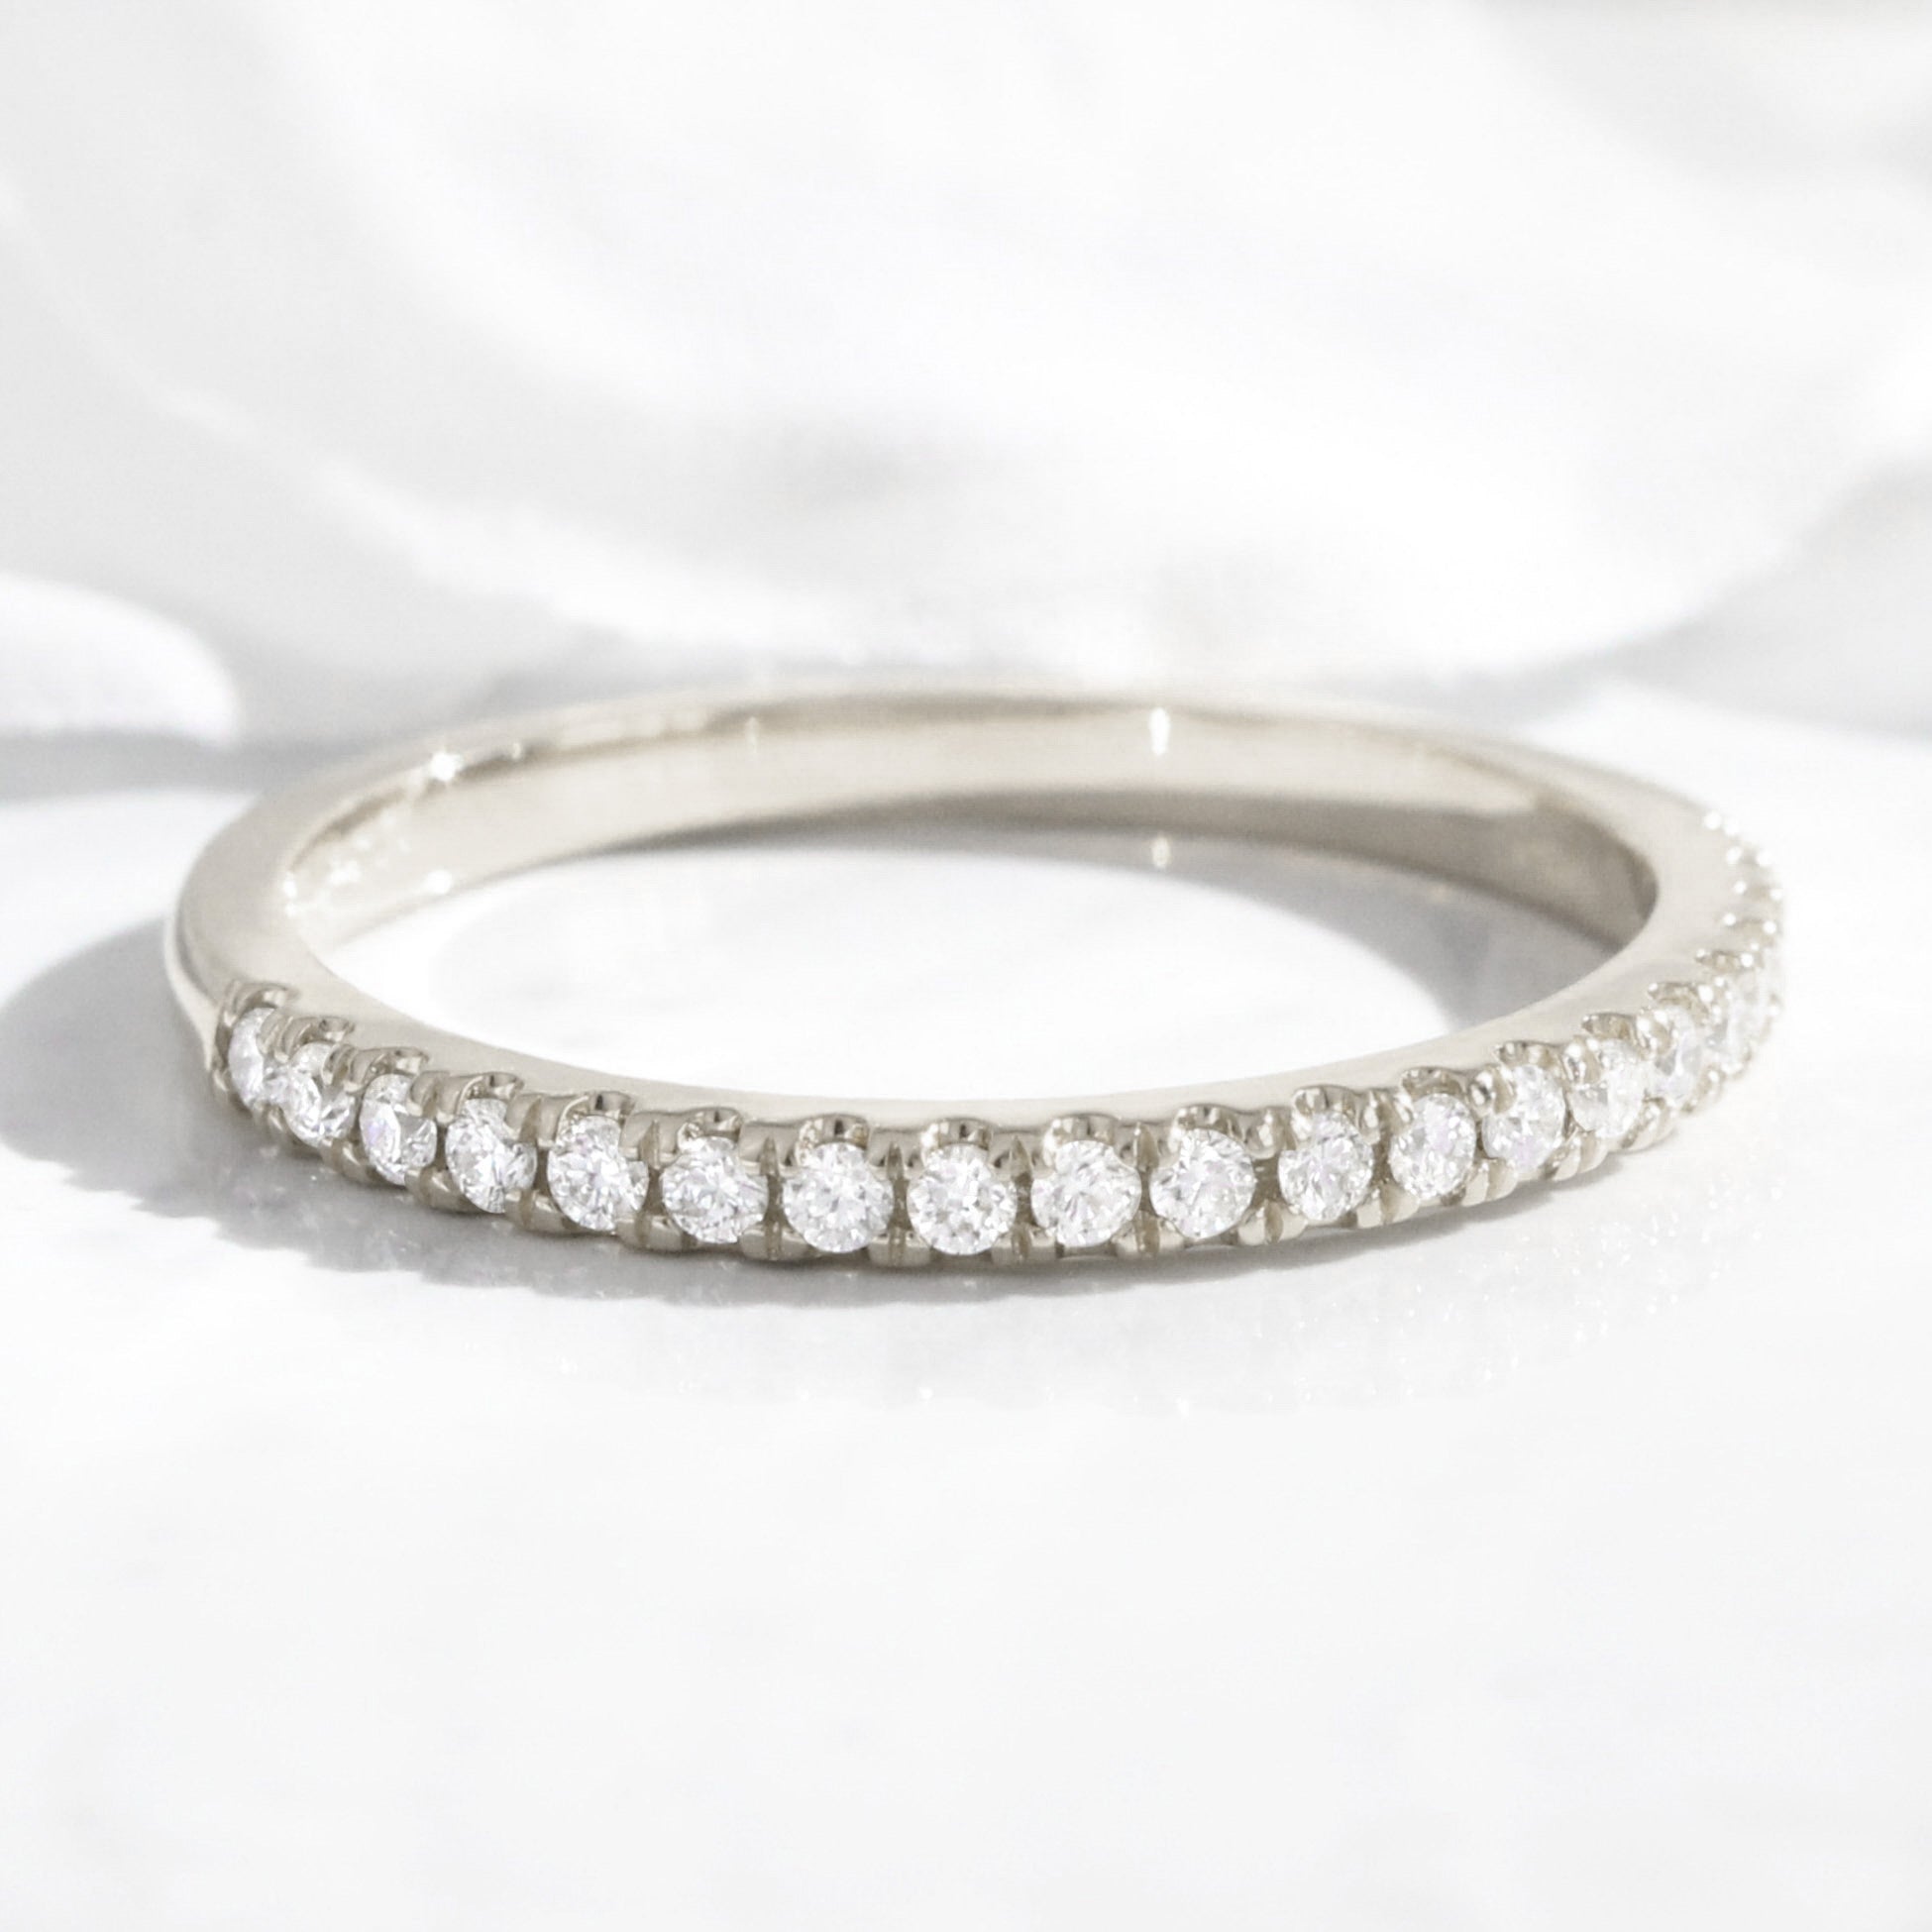 Pave diamond wedding ring white gold half eternity wedding band la more design jewelry